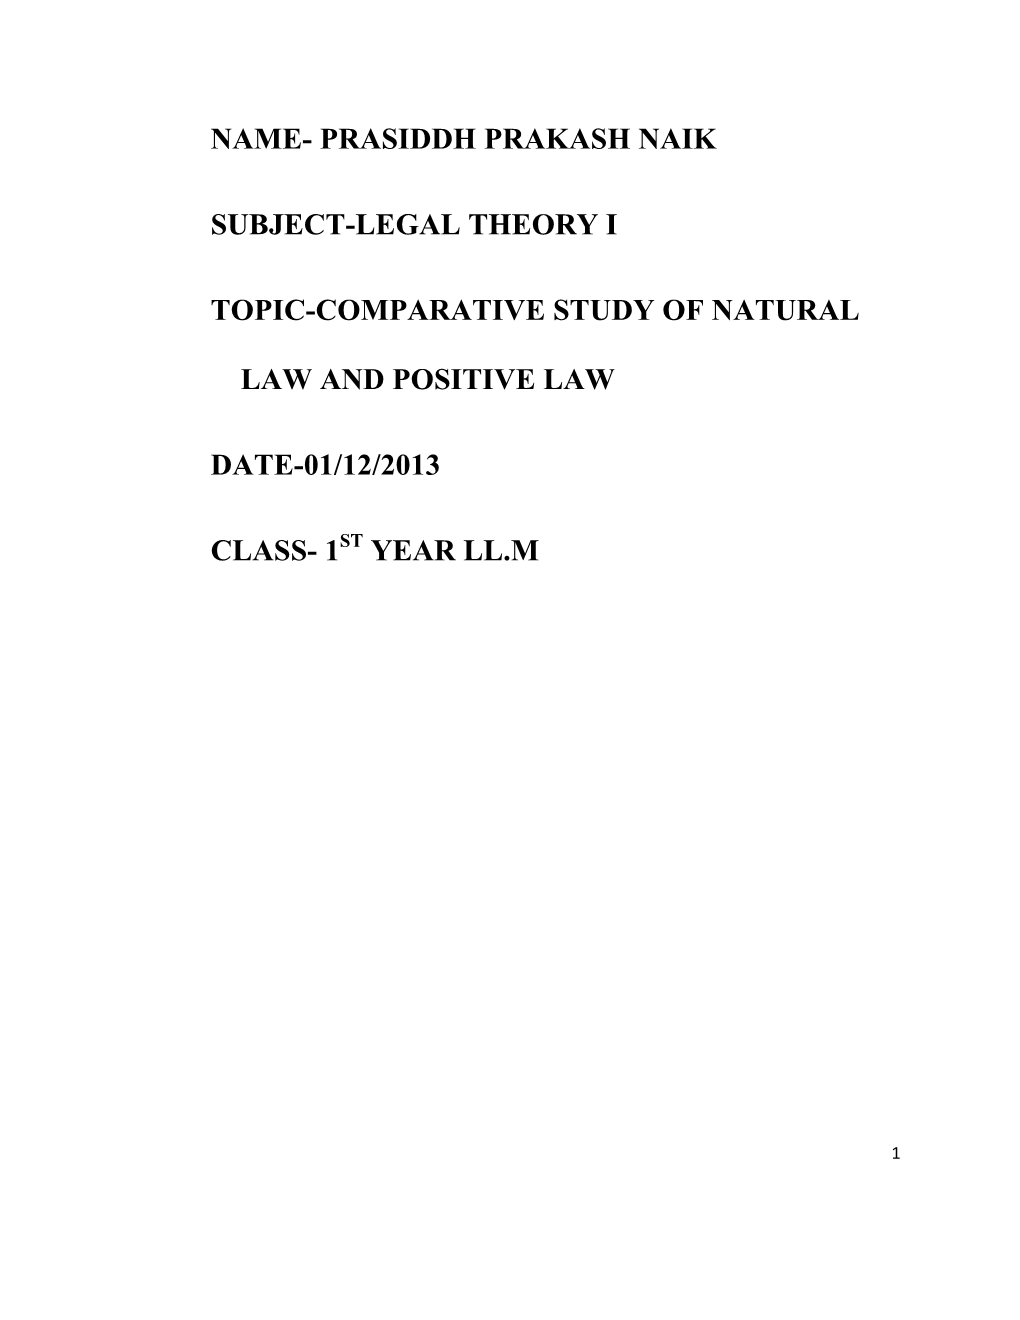 Prasiddh Prakash Naik Subject-Legal Theory I Topic-Comparative Study Of